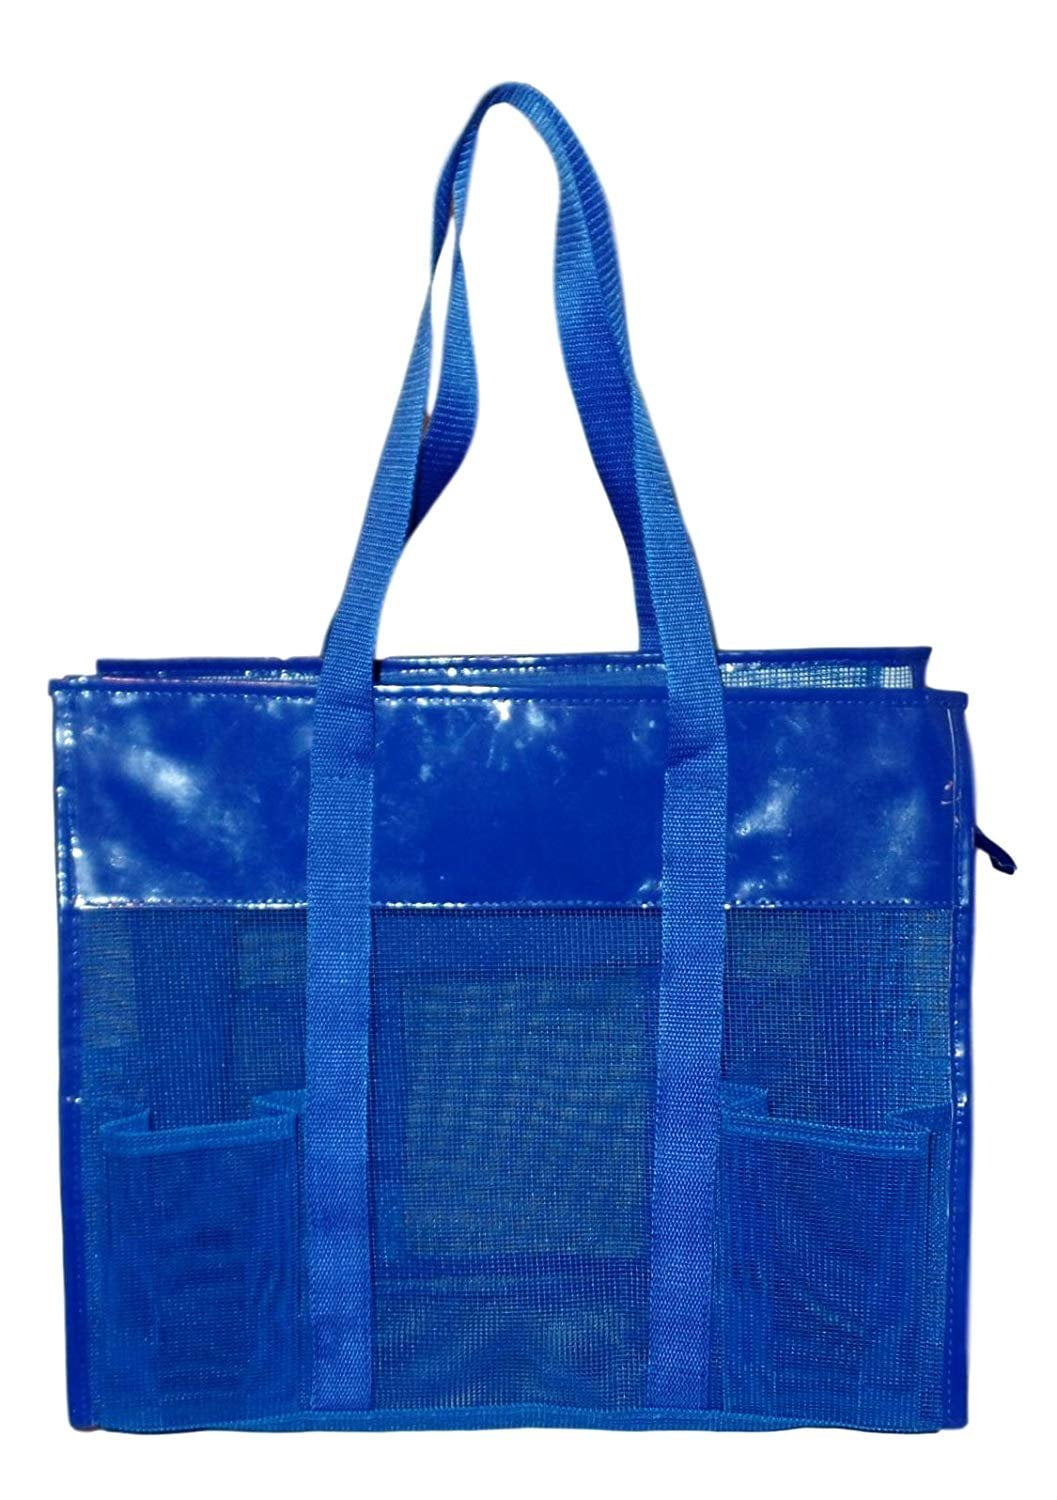 Mesh Shopper Utility Beach Bag Zipper Organizing Tote Bag Royal